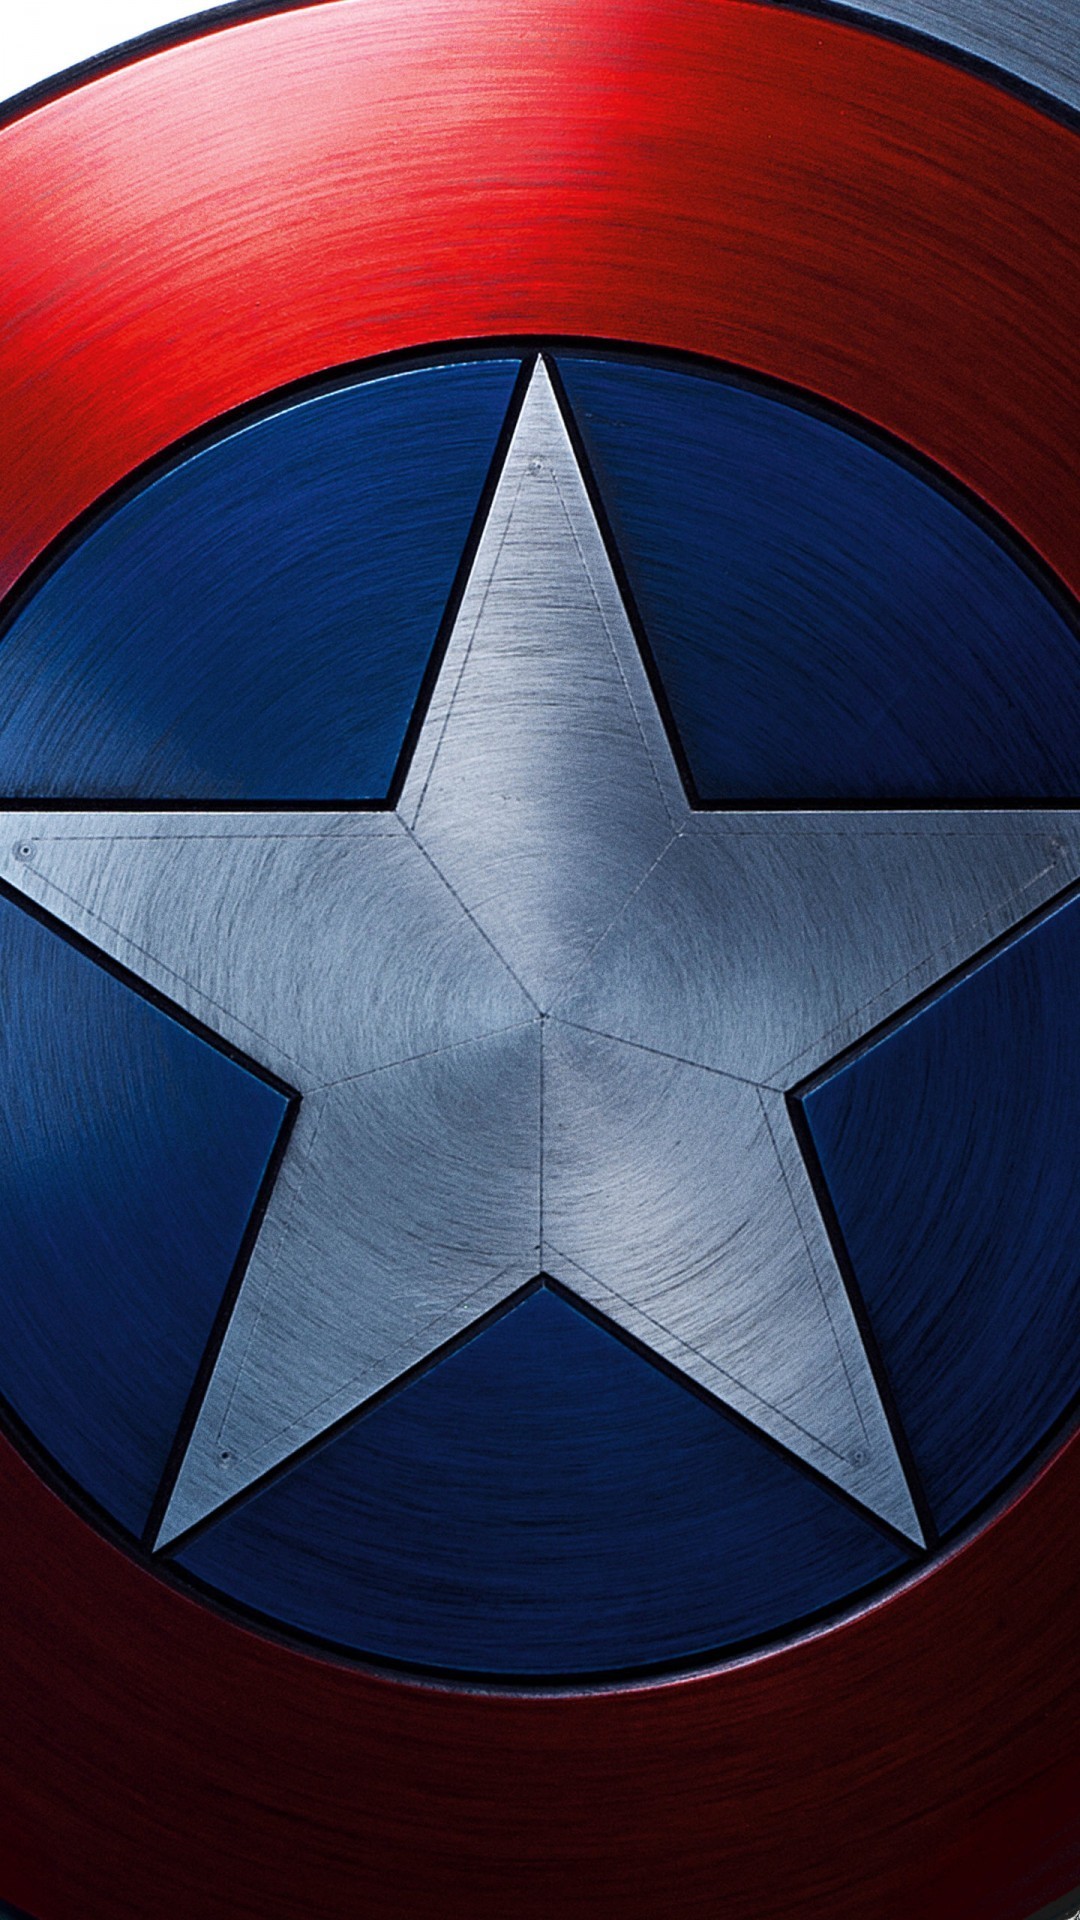 Captain America shield HD Wallpaper Wallpapers Pinterest Captain america shield and Hd wallpaper